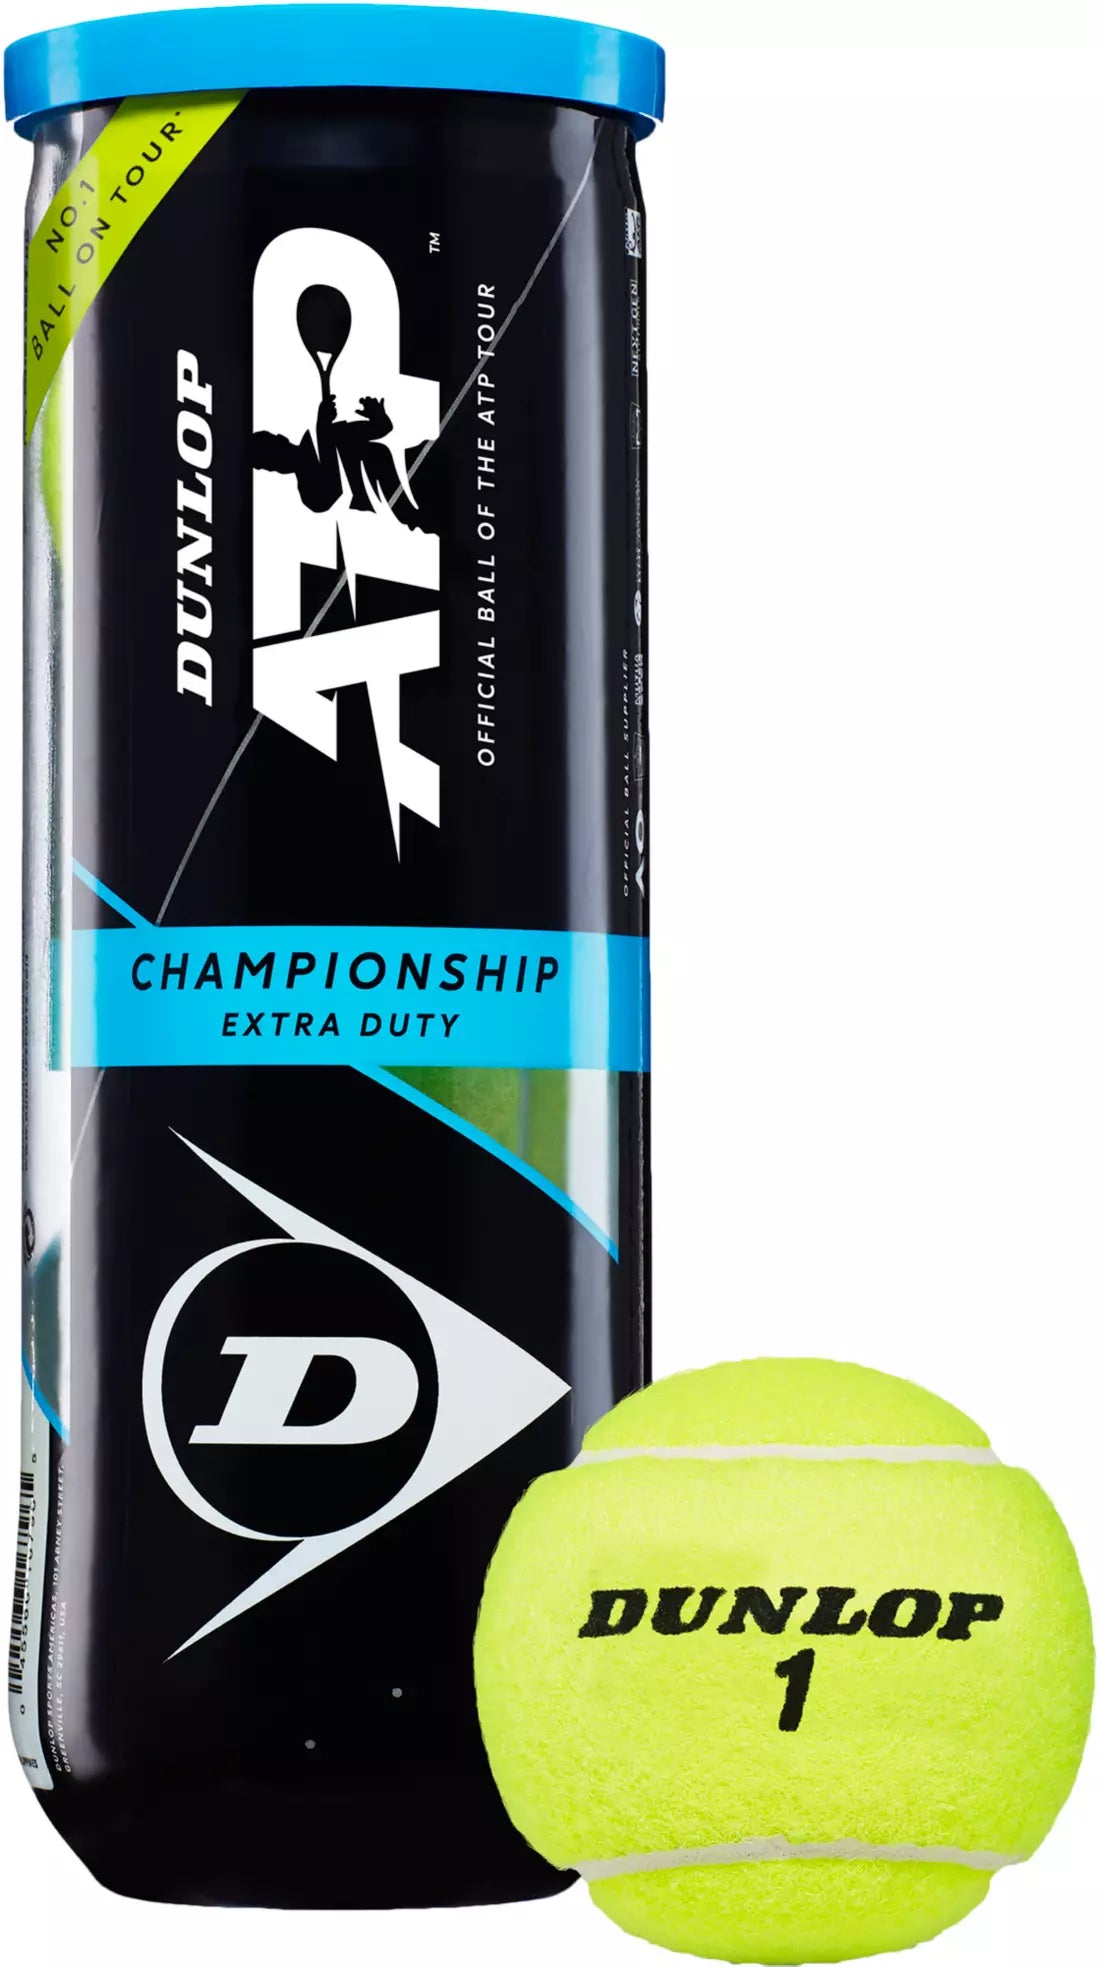 Dunlop ATP Championship Extra Duty Tennis Balls